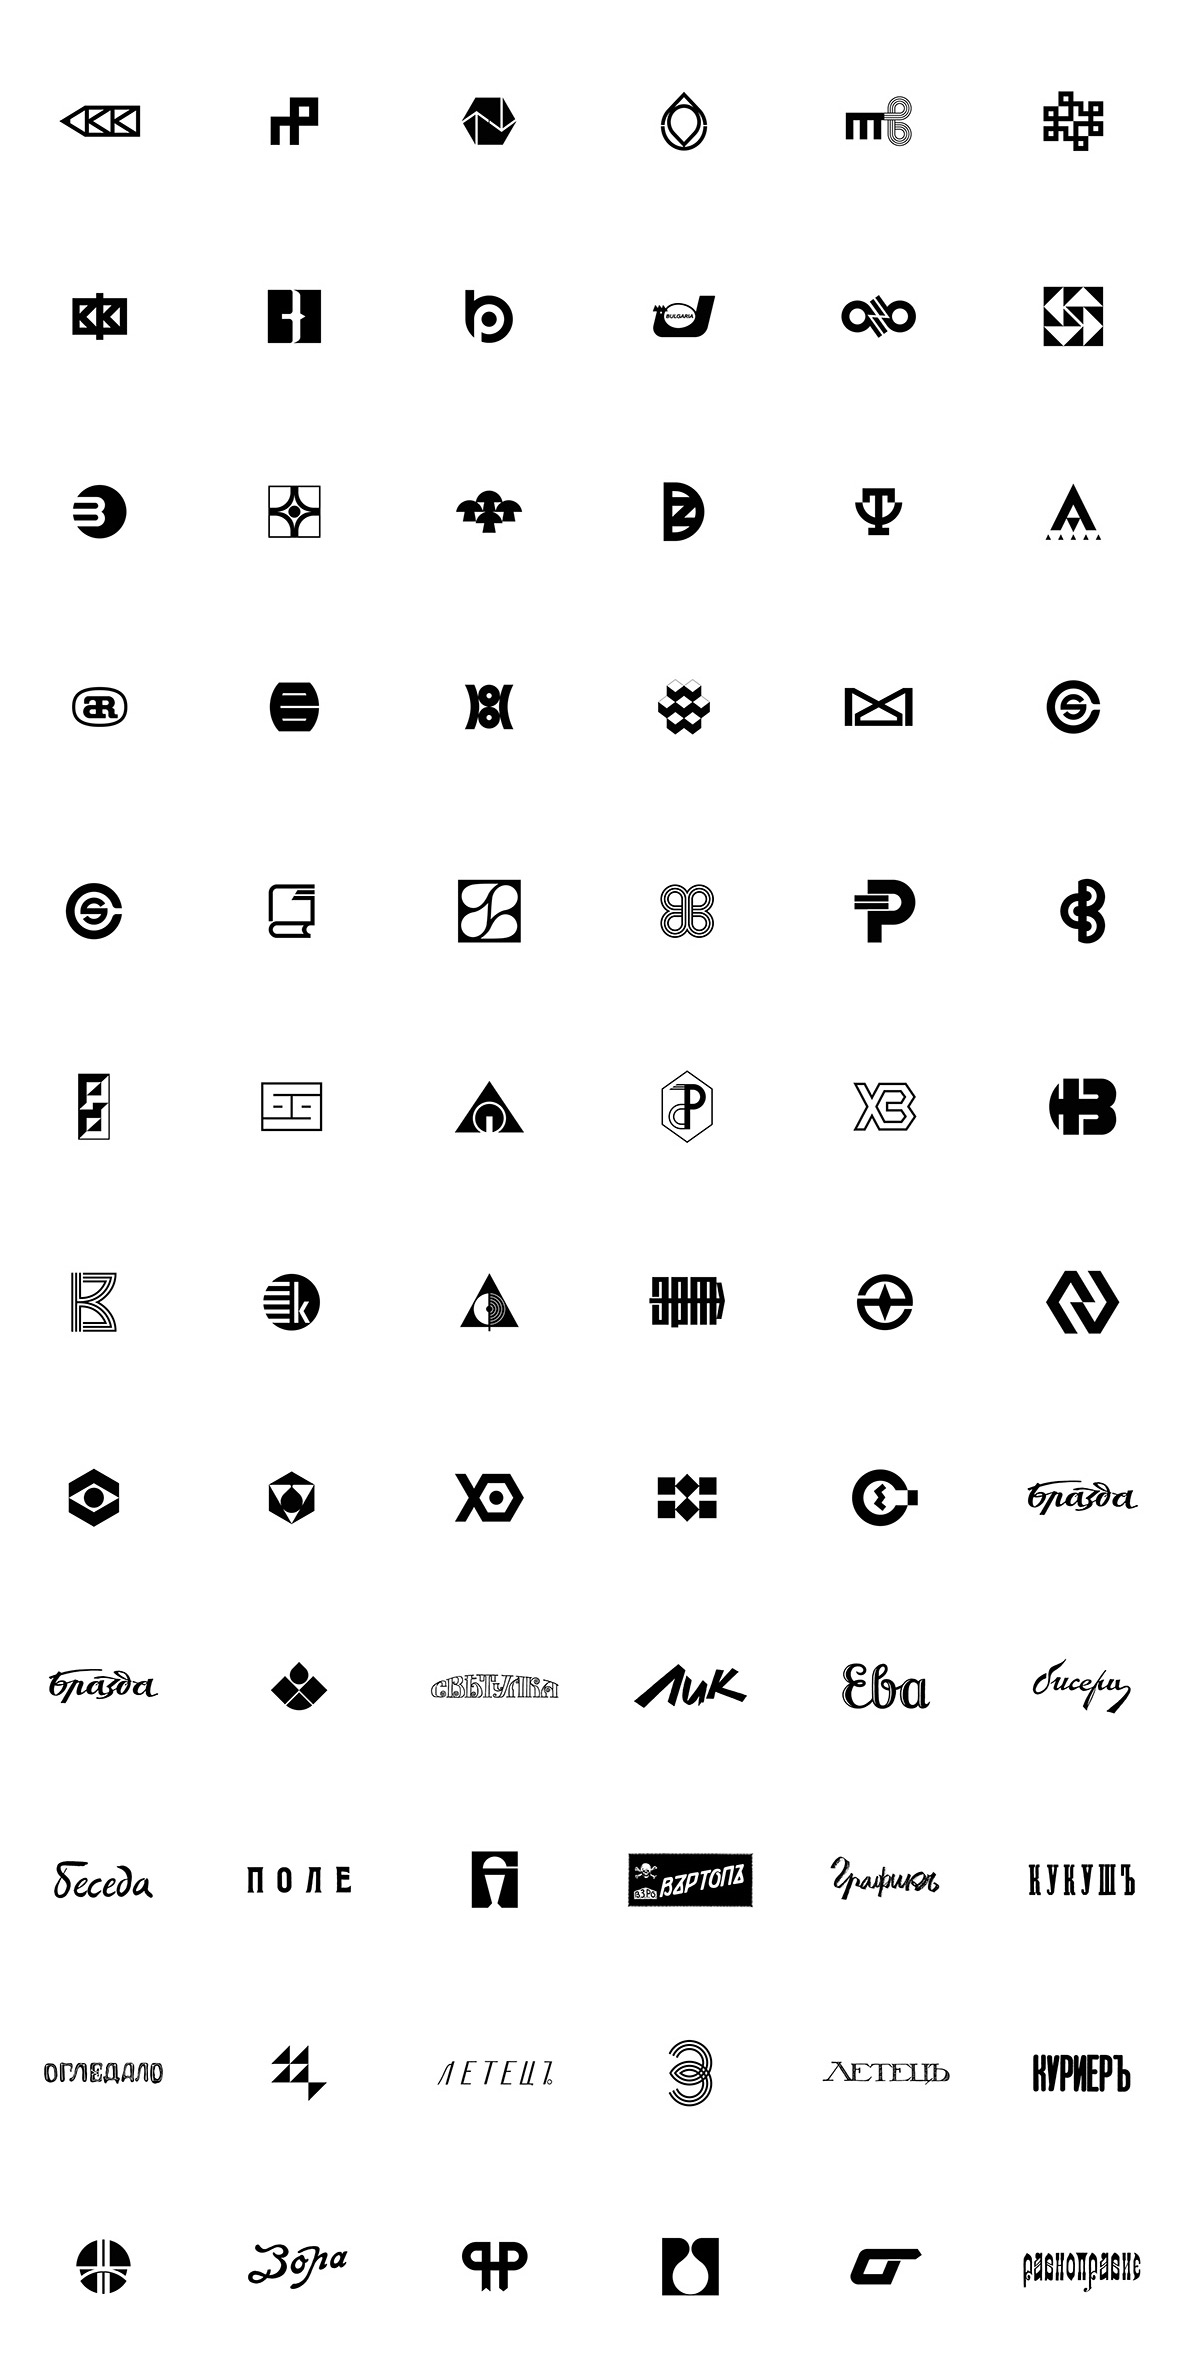 Bulgarian logos